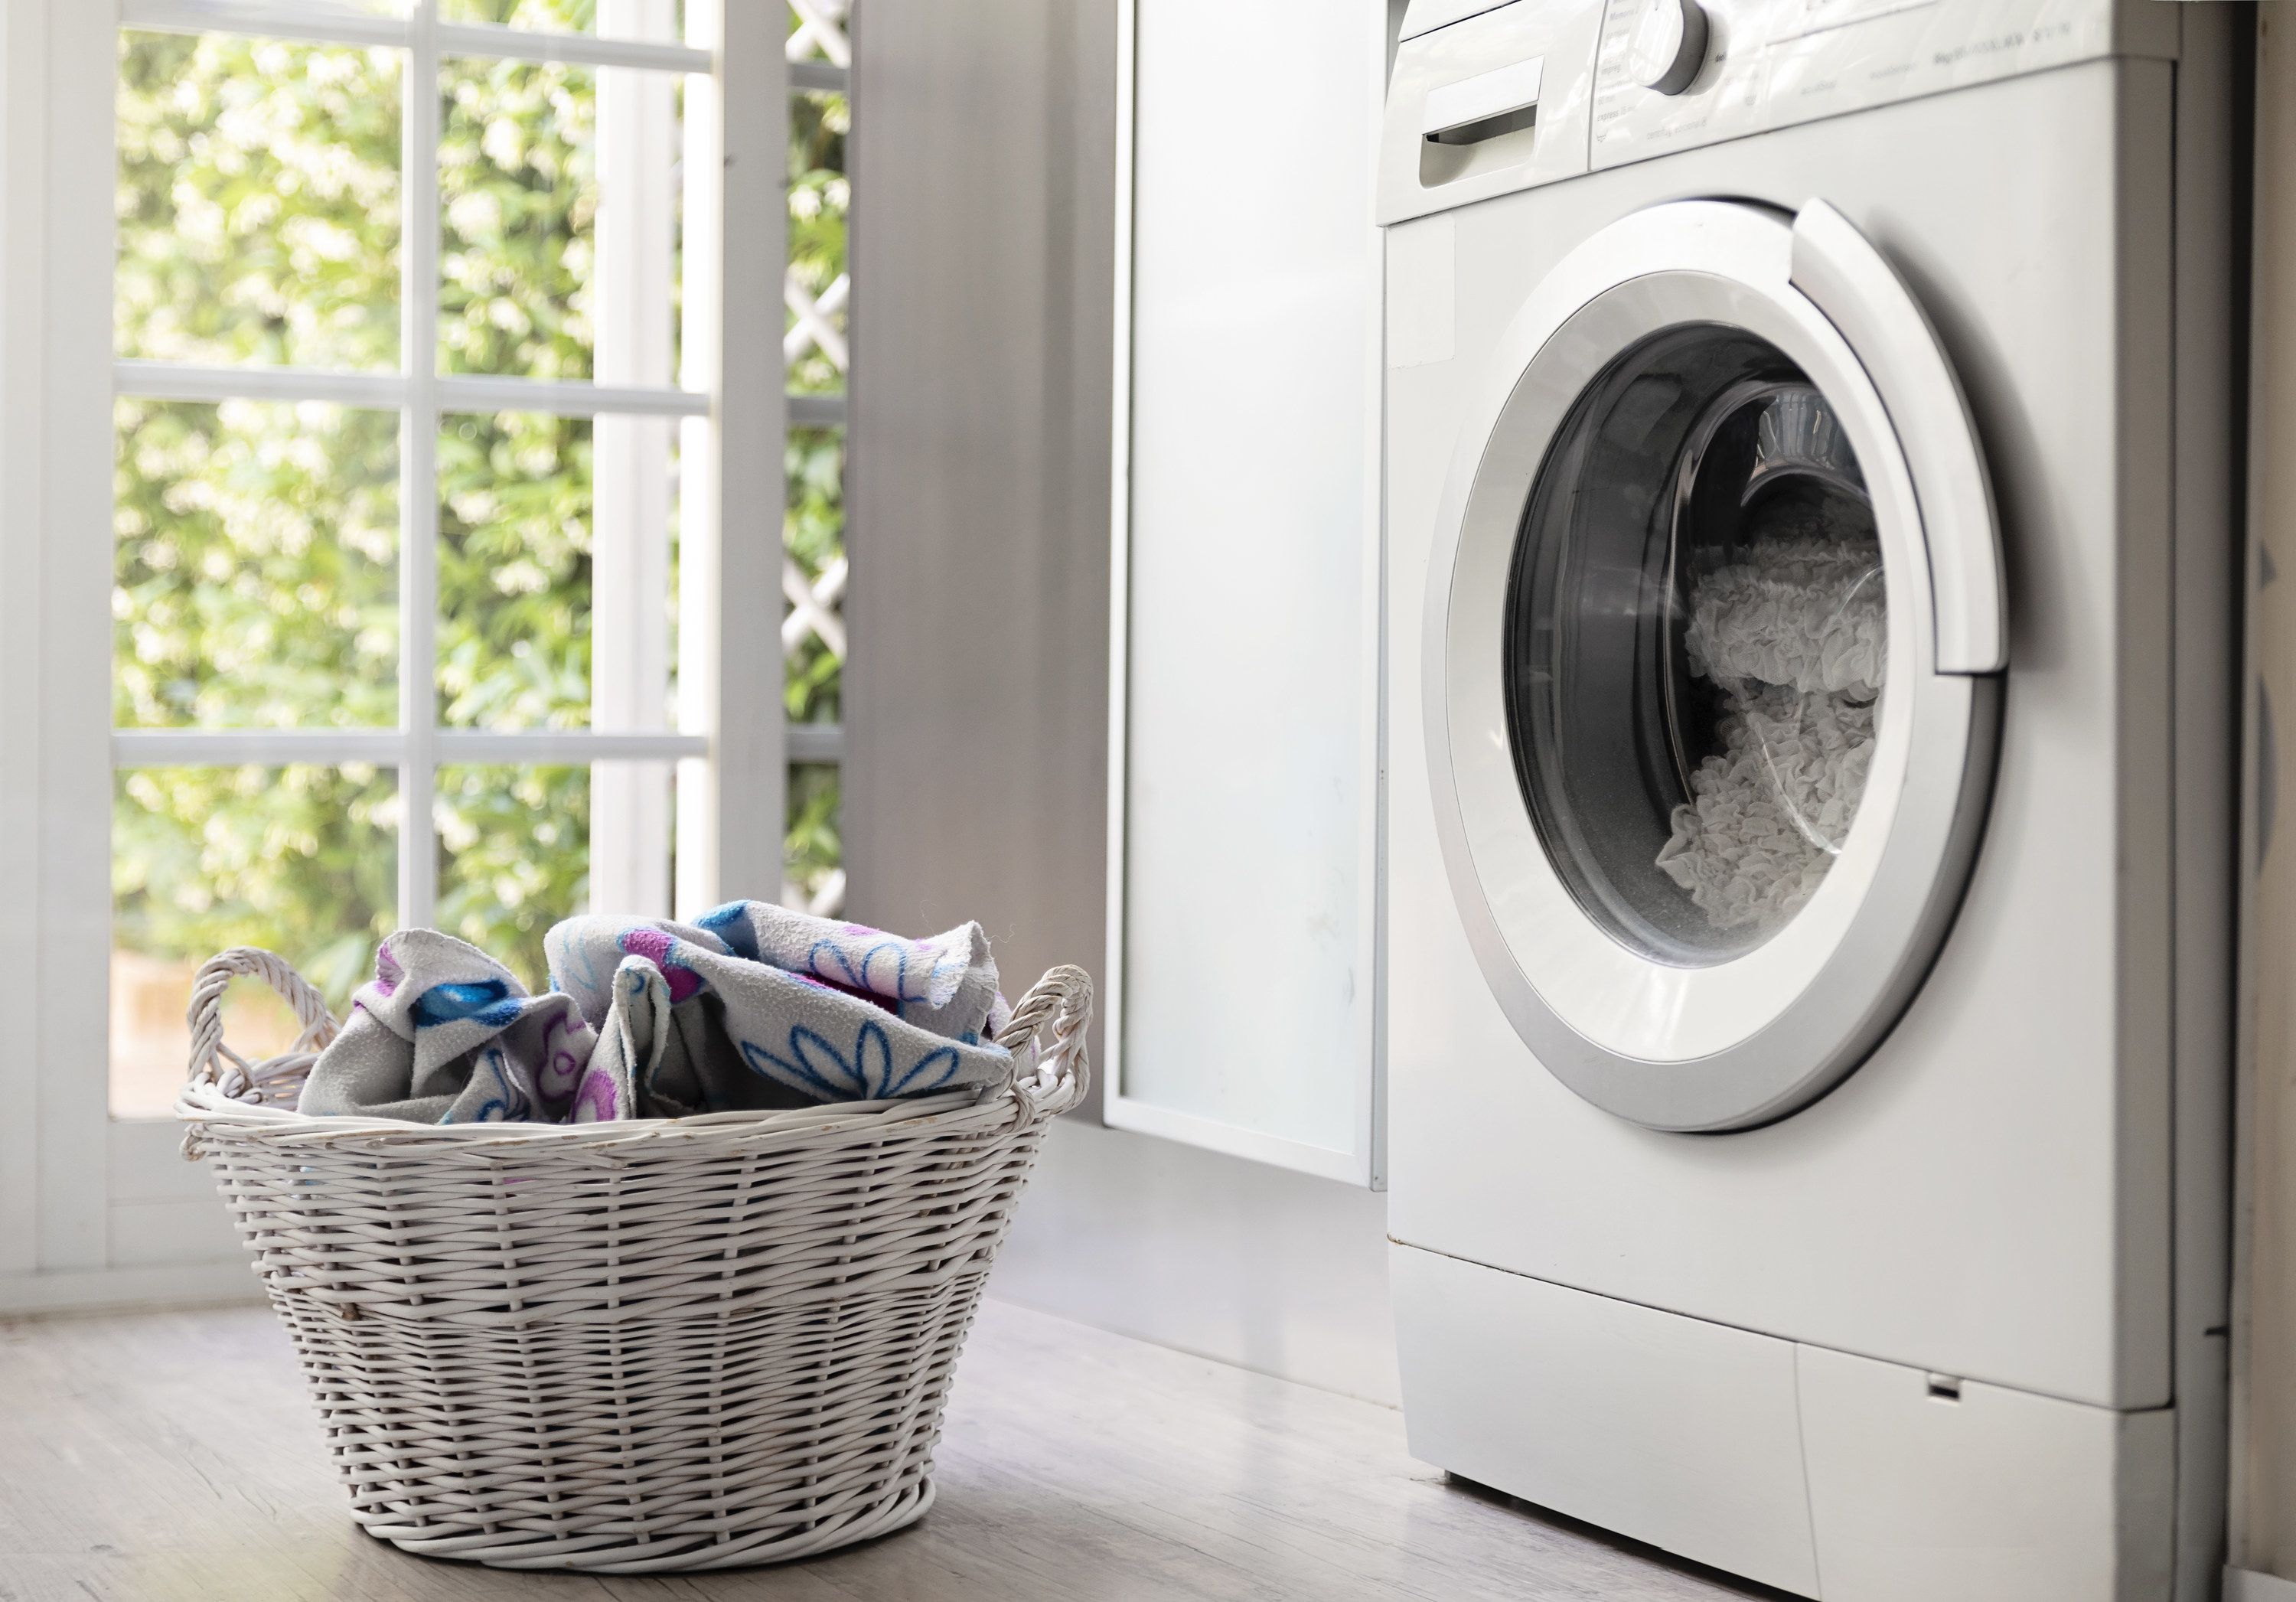 A laundry basket sits next to a washing machine